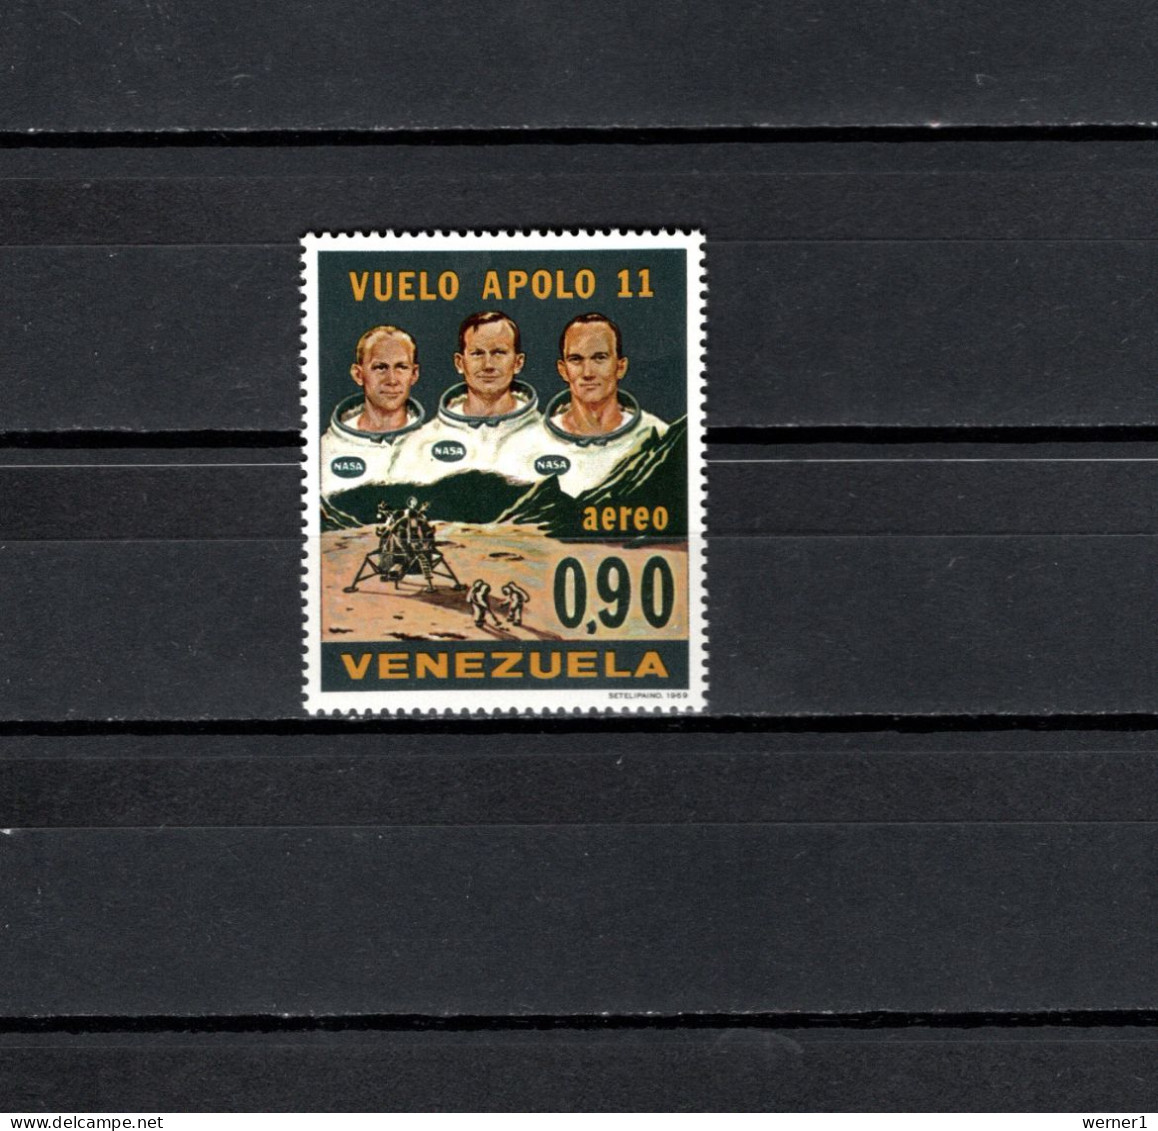 Venezuela 1969 Space, Apollo 11 Moonlanding Stamp MNH - Zuid-Amerika